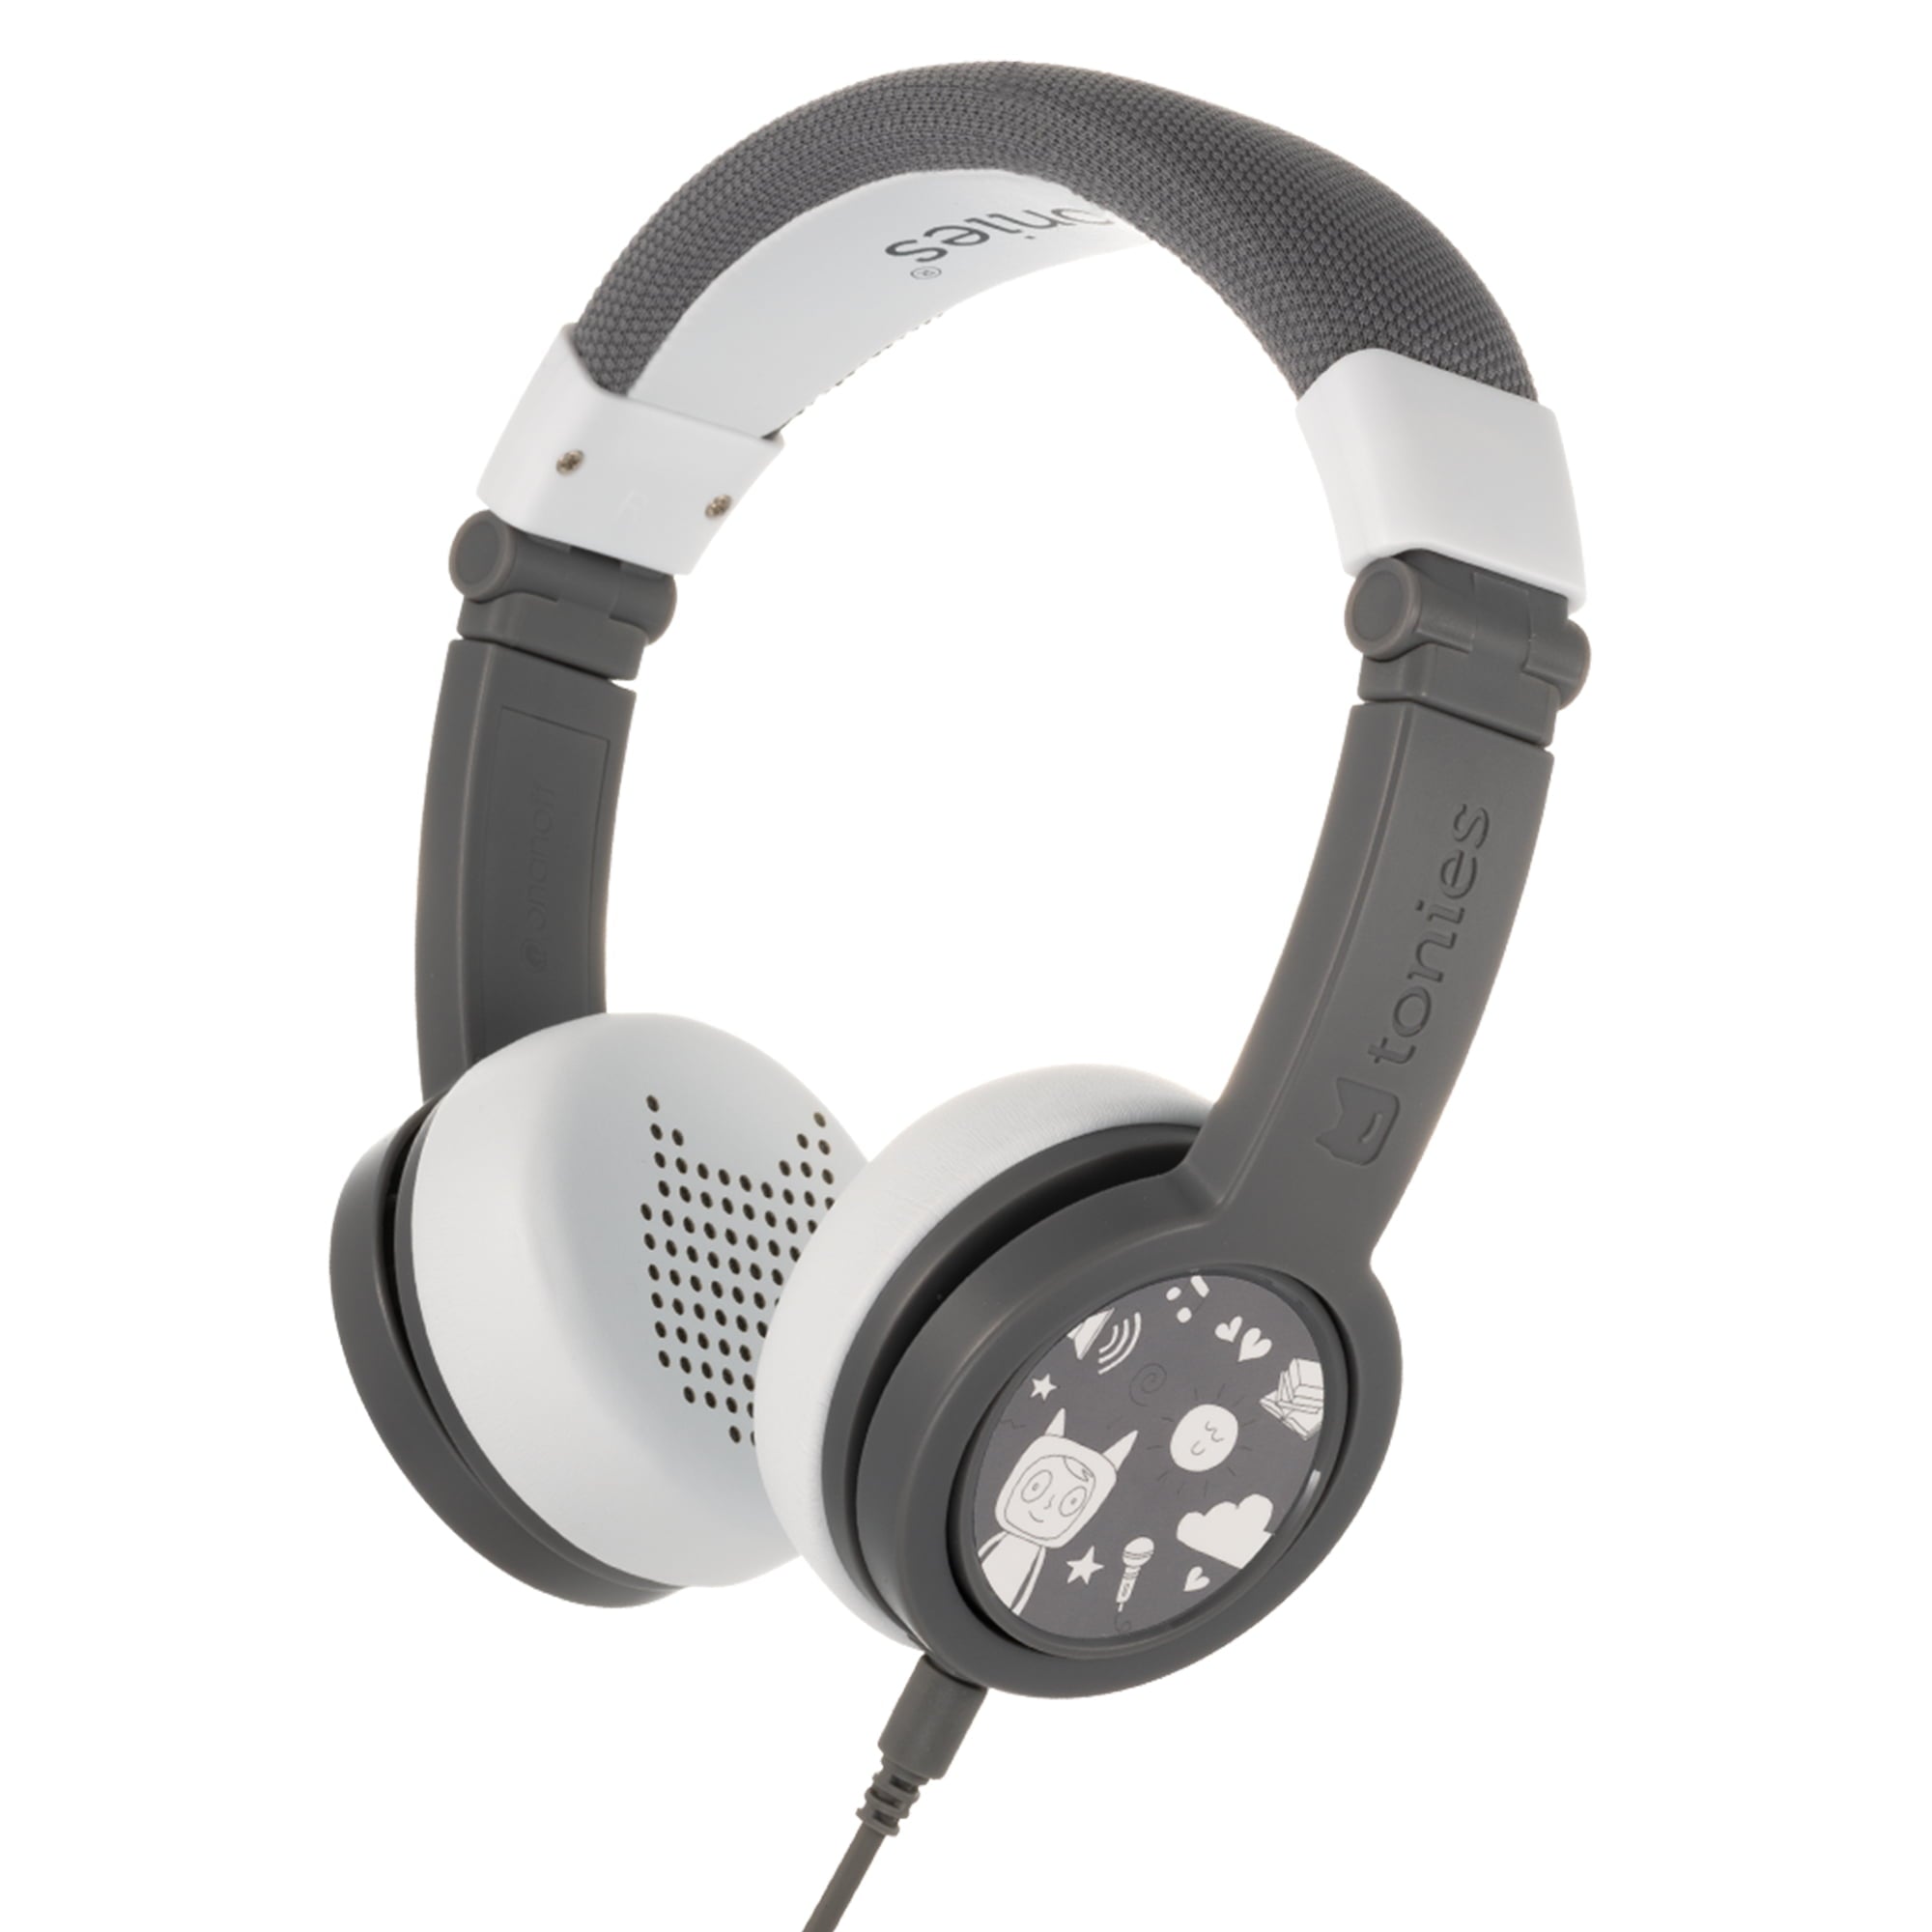 Tonies Foldable Headphones - ANB Baby -840173600320$20 - $50